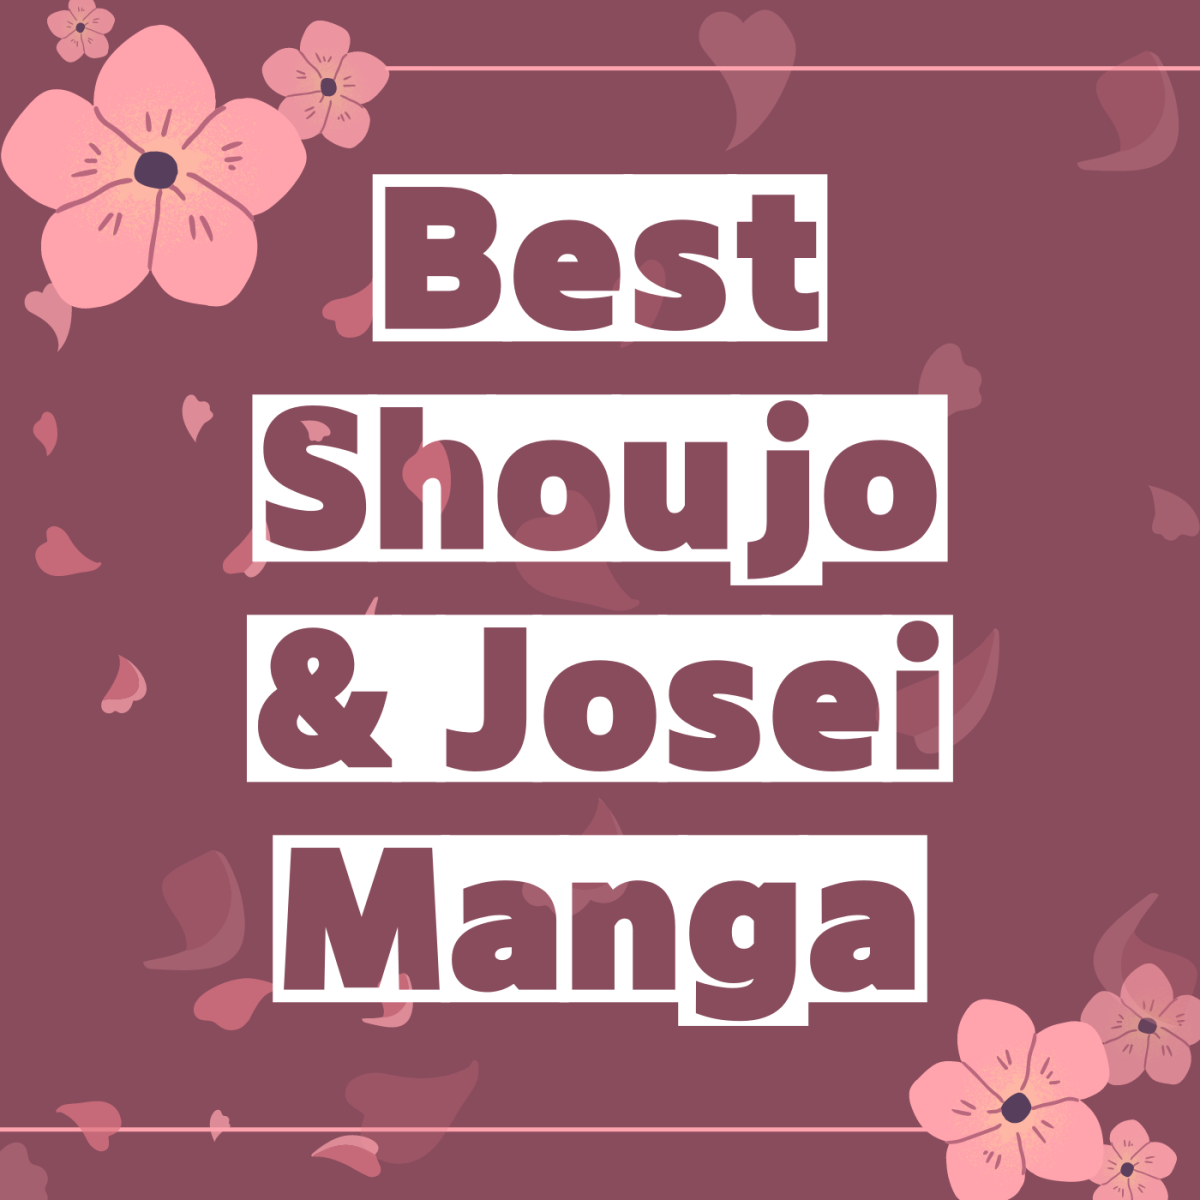 16 Best Shoujo and Josei Manga: Romance, School Life, and More